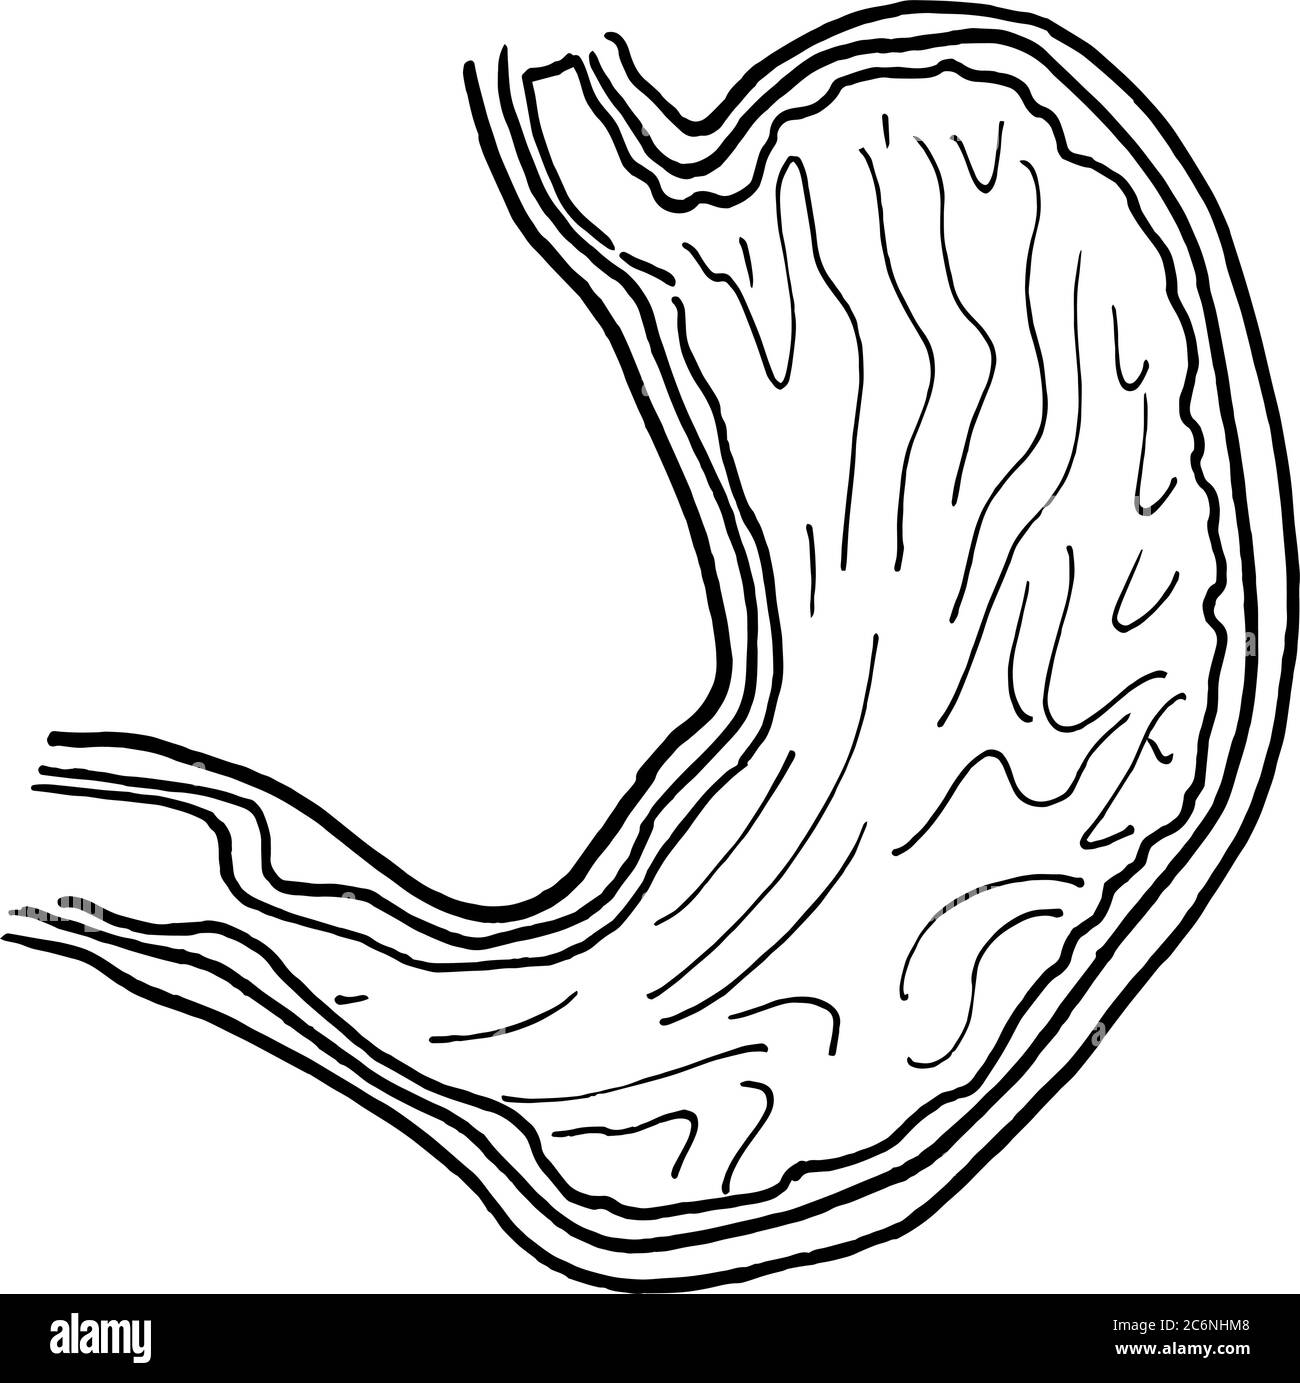 Contour vector outline drawing of human stomach organ. Medical design editable template Stock Vector